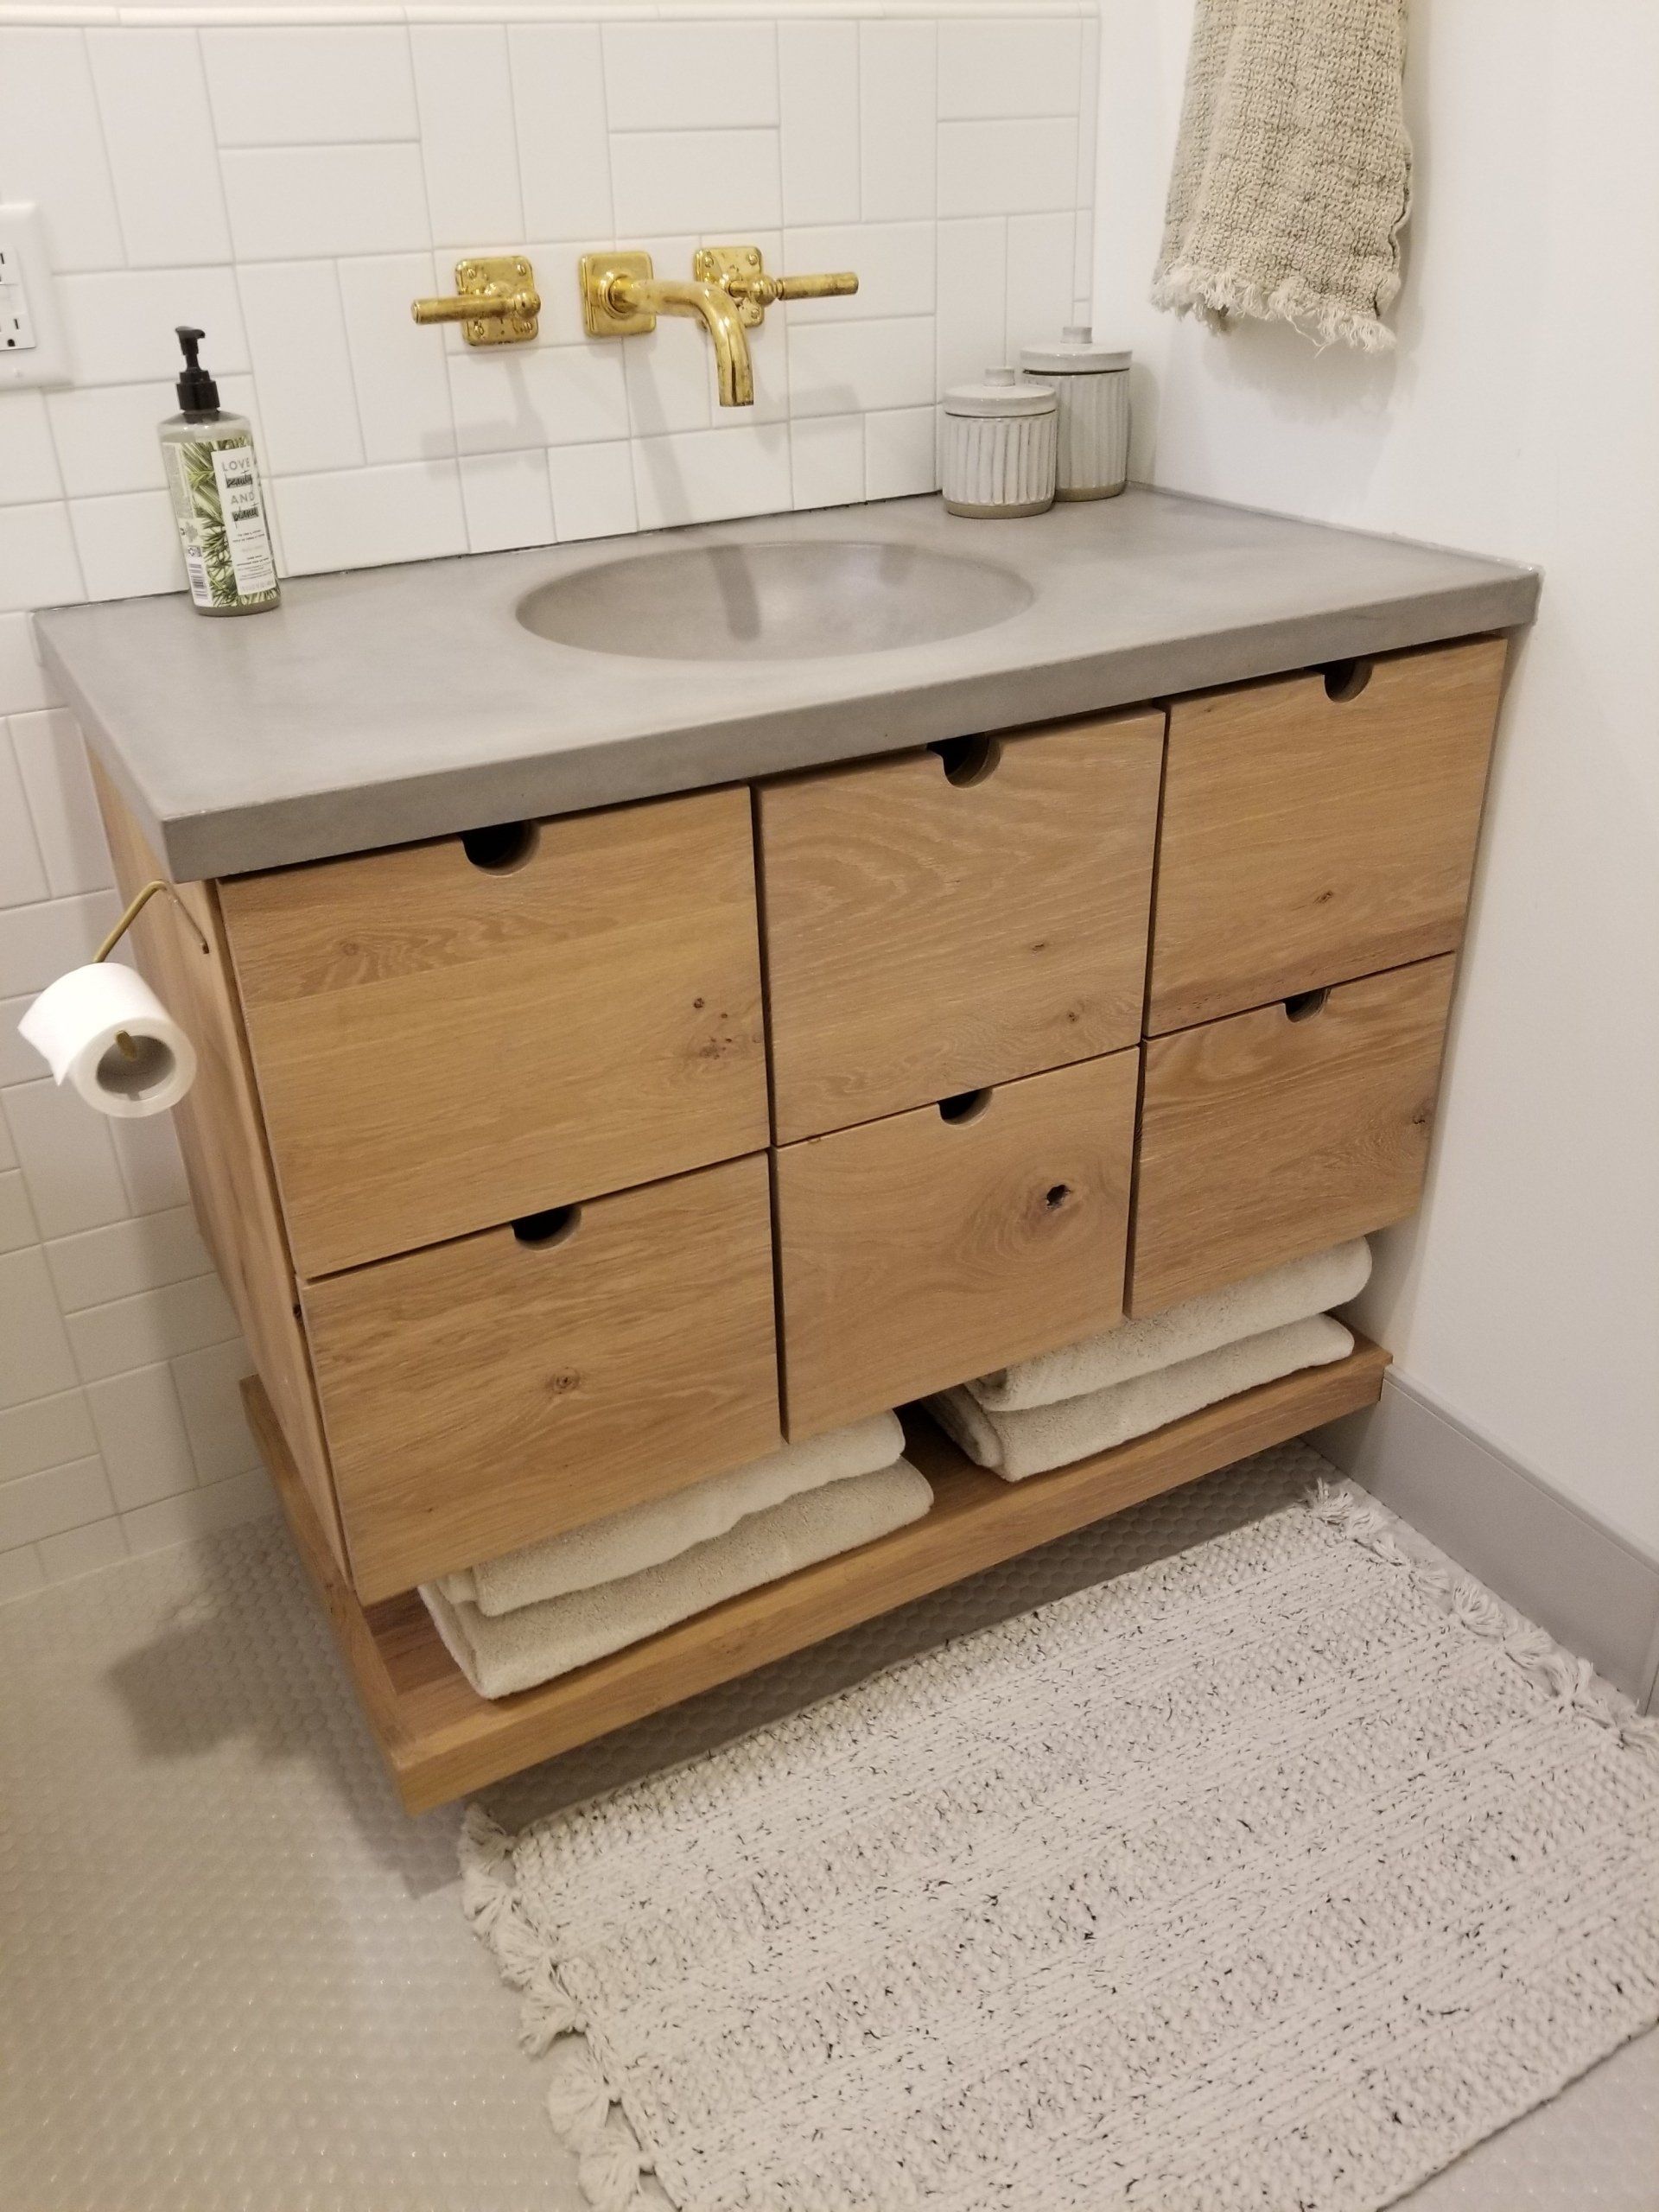 Bathroom cabinet